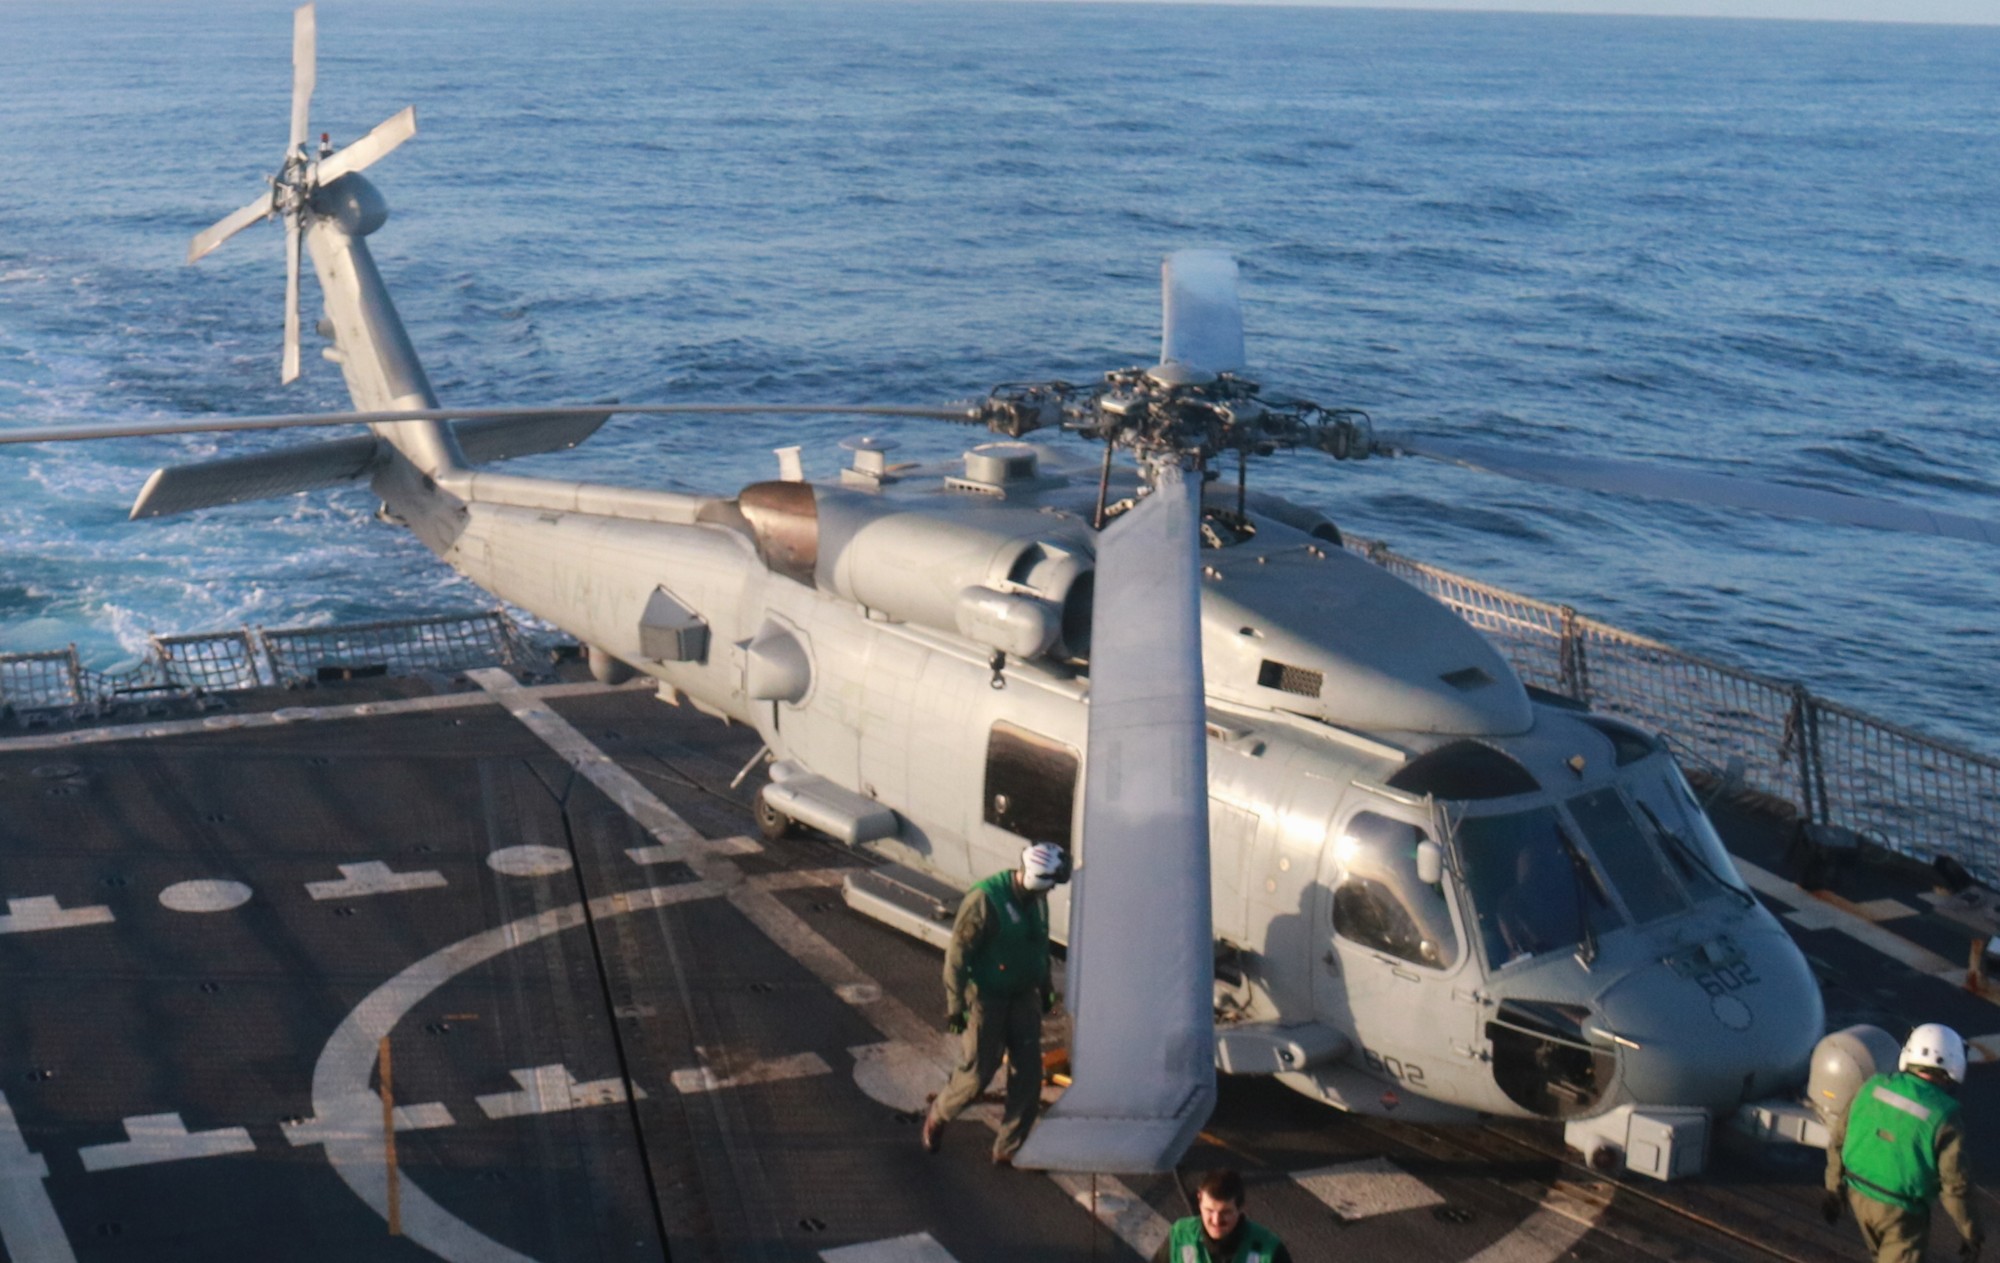 hsm-60 jaguars helicopter maritime strike squadron navy reserve mh-60r seahawk uss forrest sherman ddg-98 09